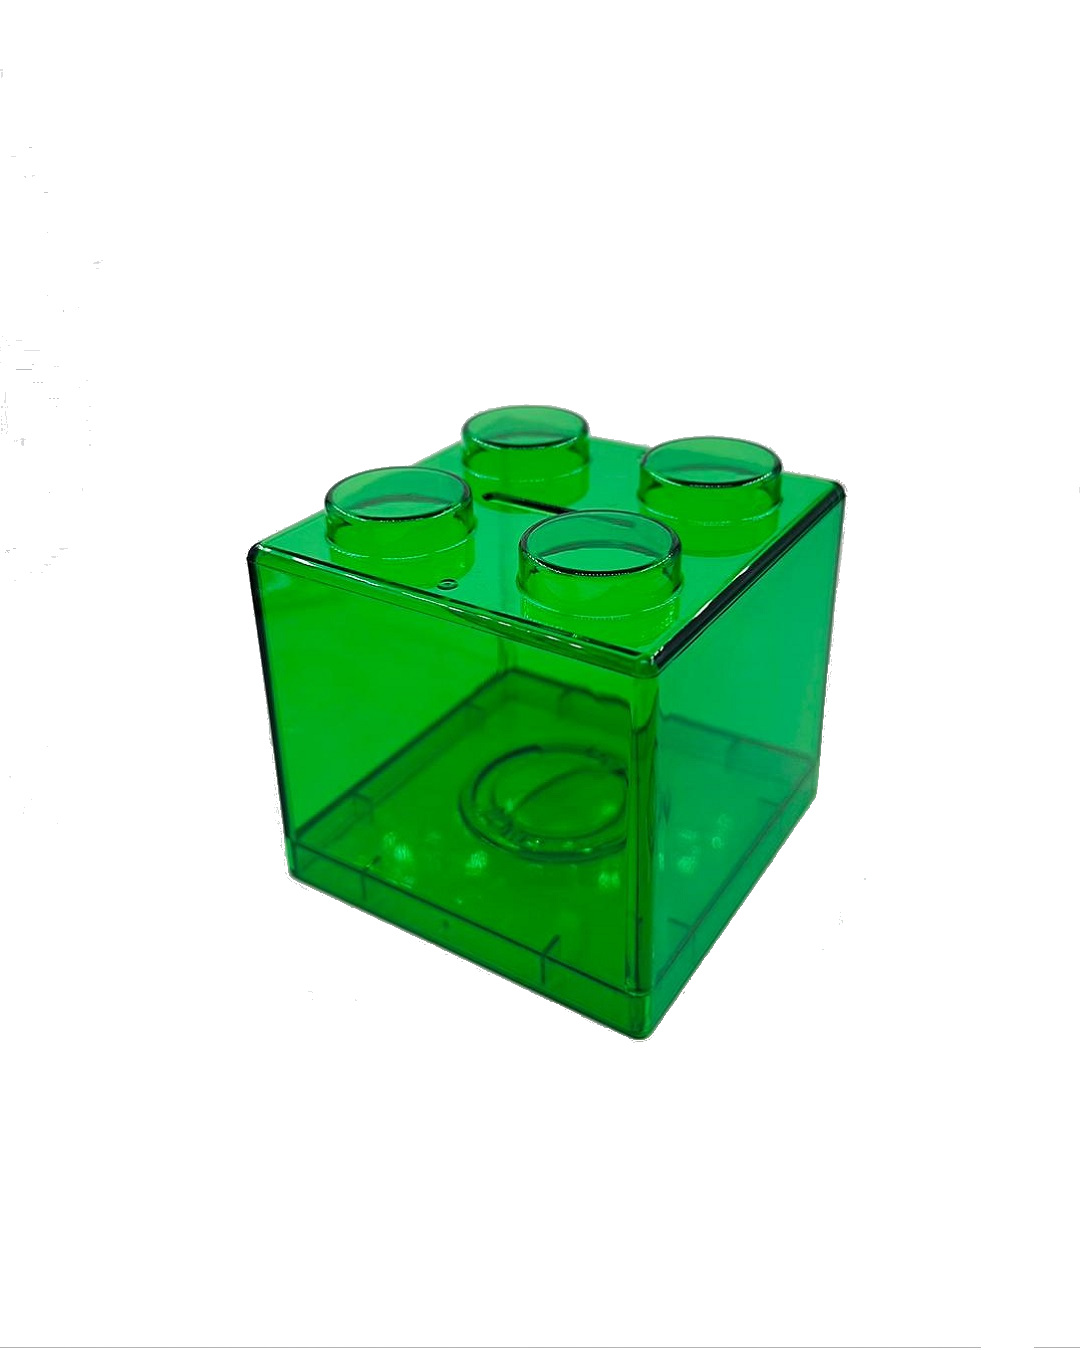 Green lego kids money box